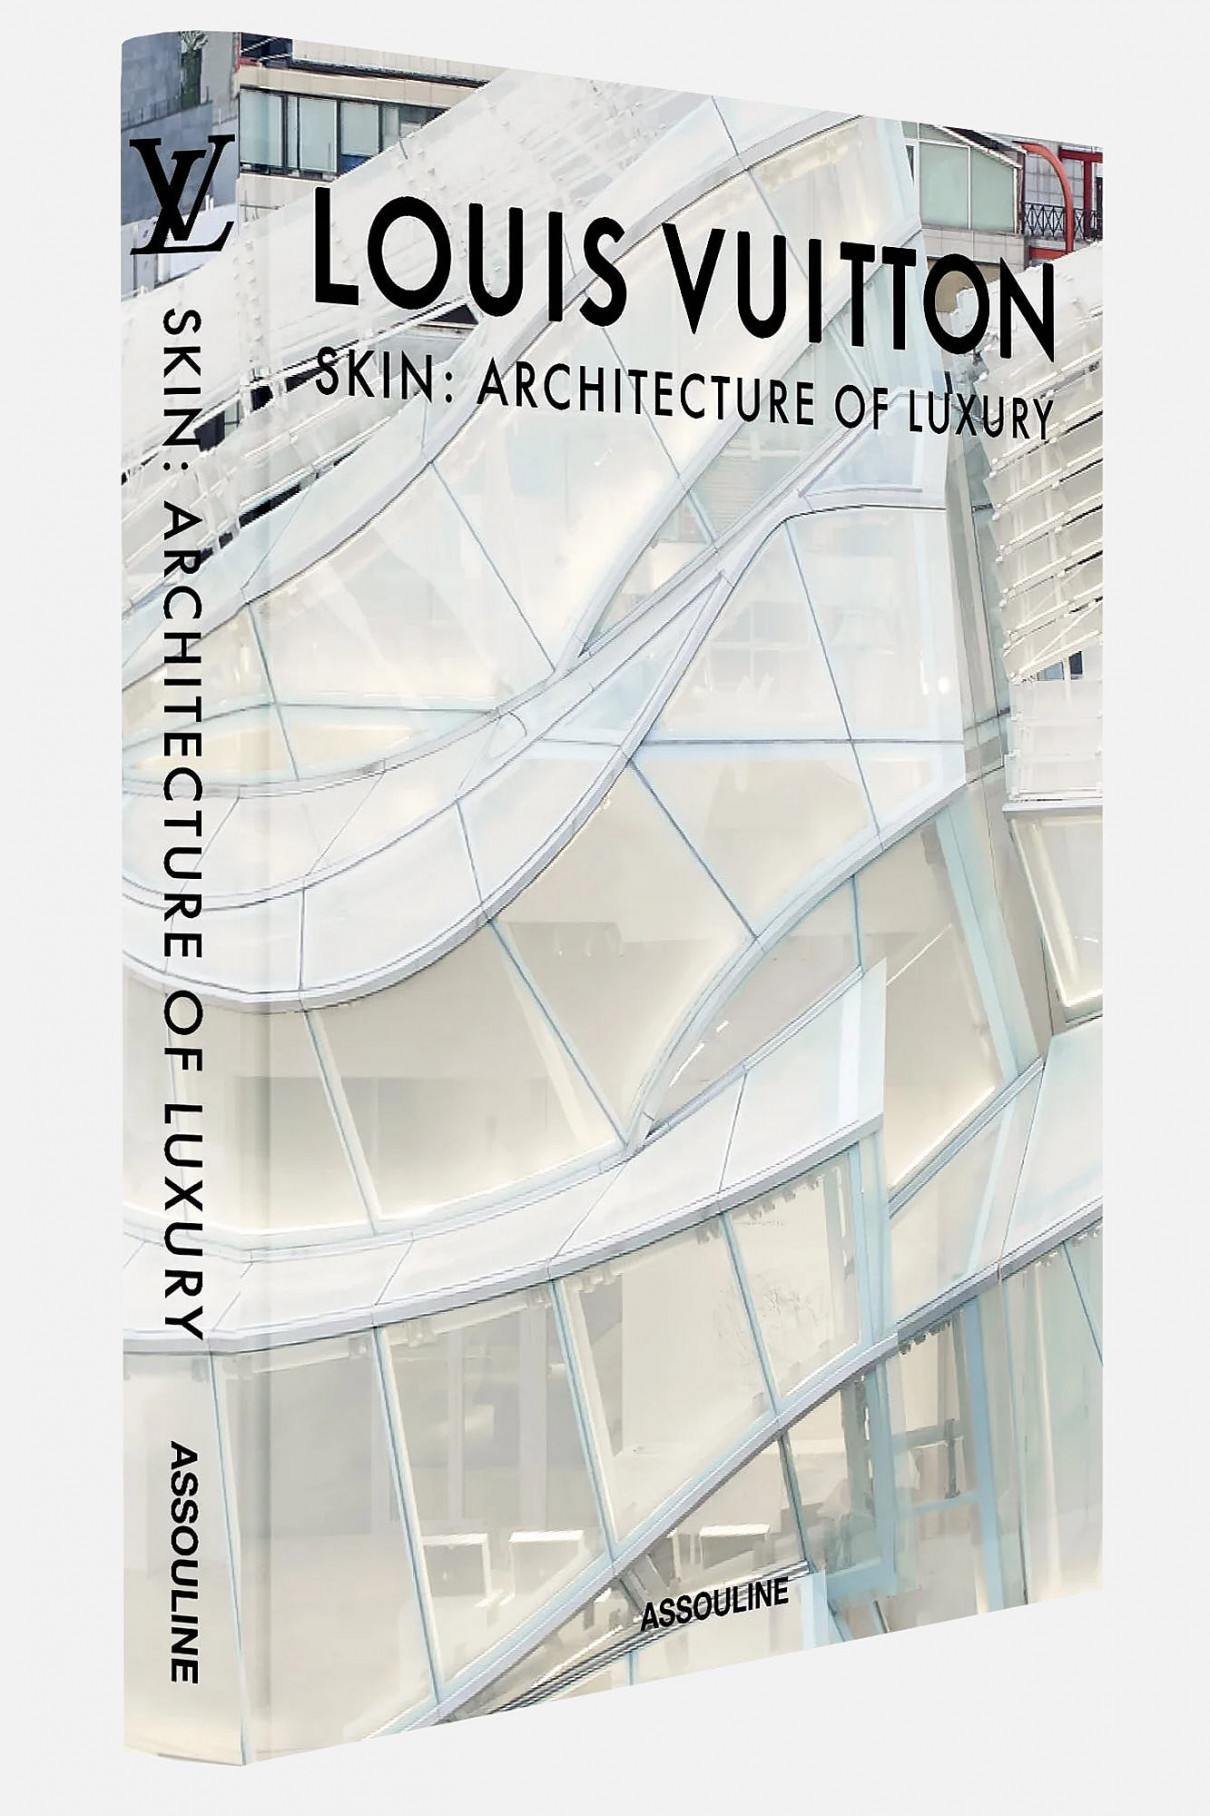 Книга ASSOULINE Louis Vuitton Skin: The Architecture of Luxury (Seoul Edition) , арт. 9781649802804 купить в интернет-магазине